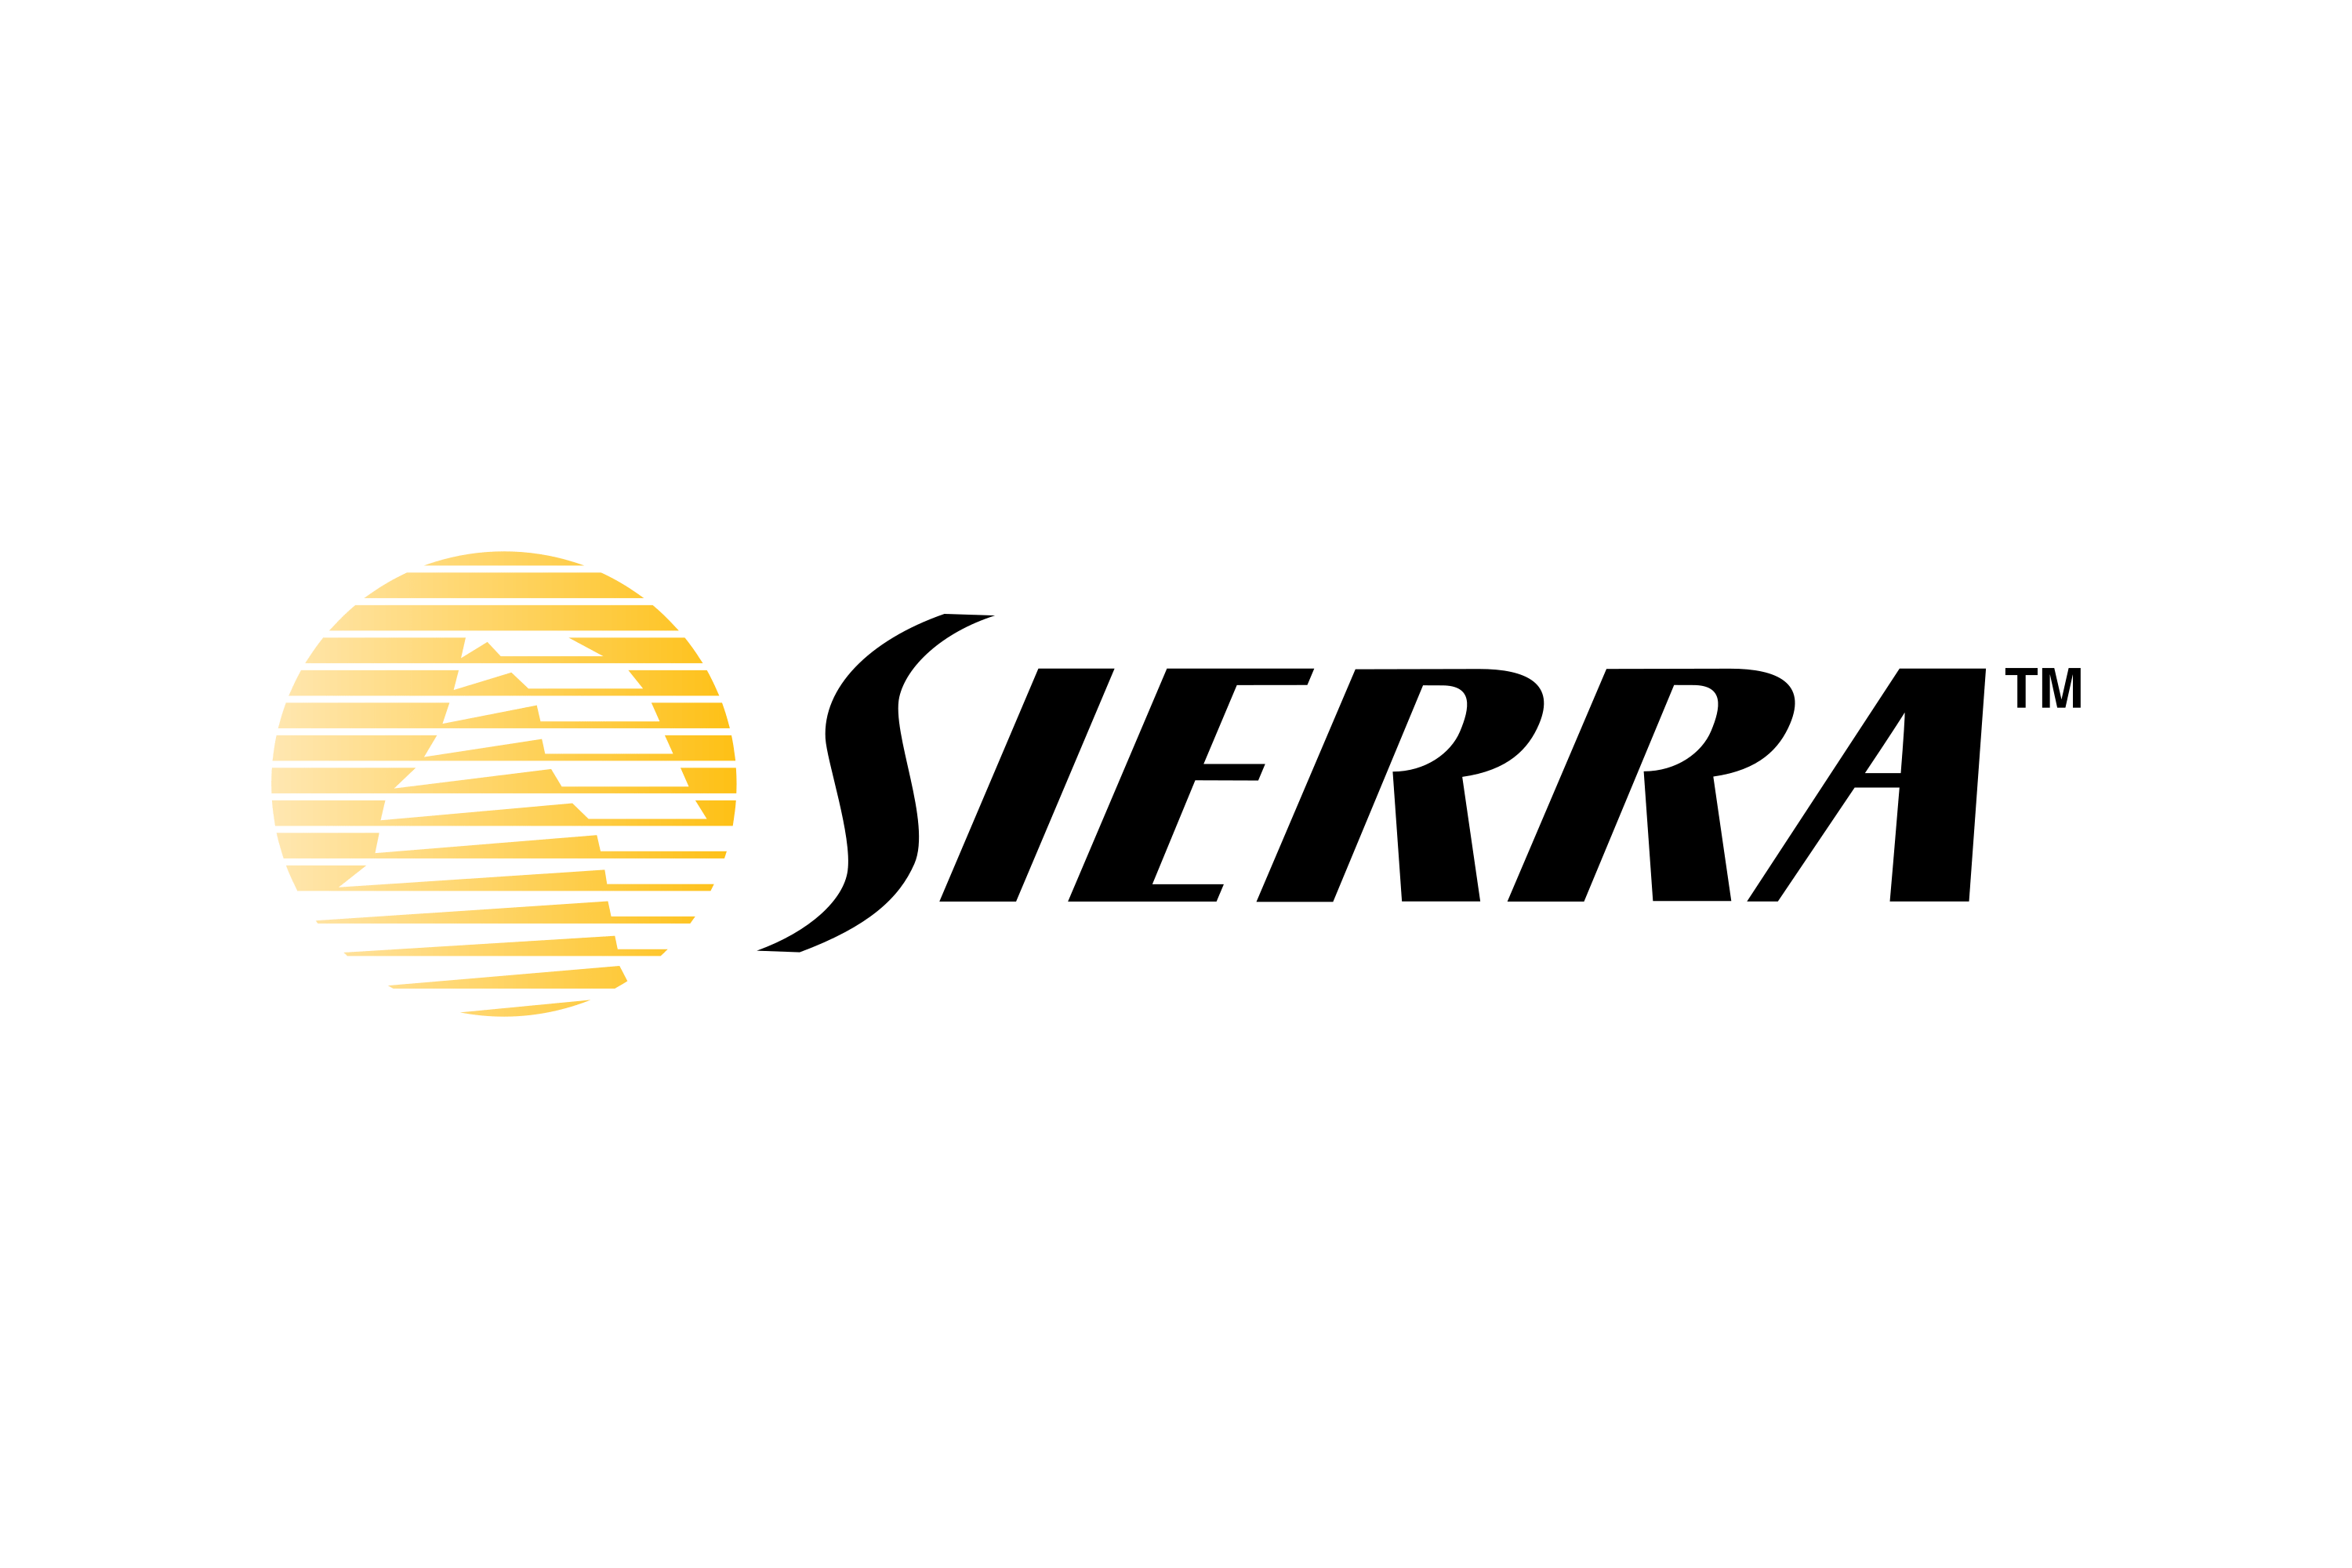 Sierra downloading